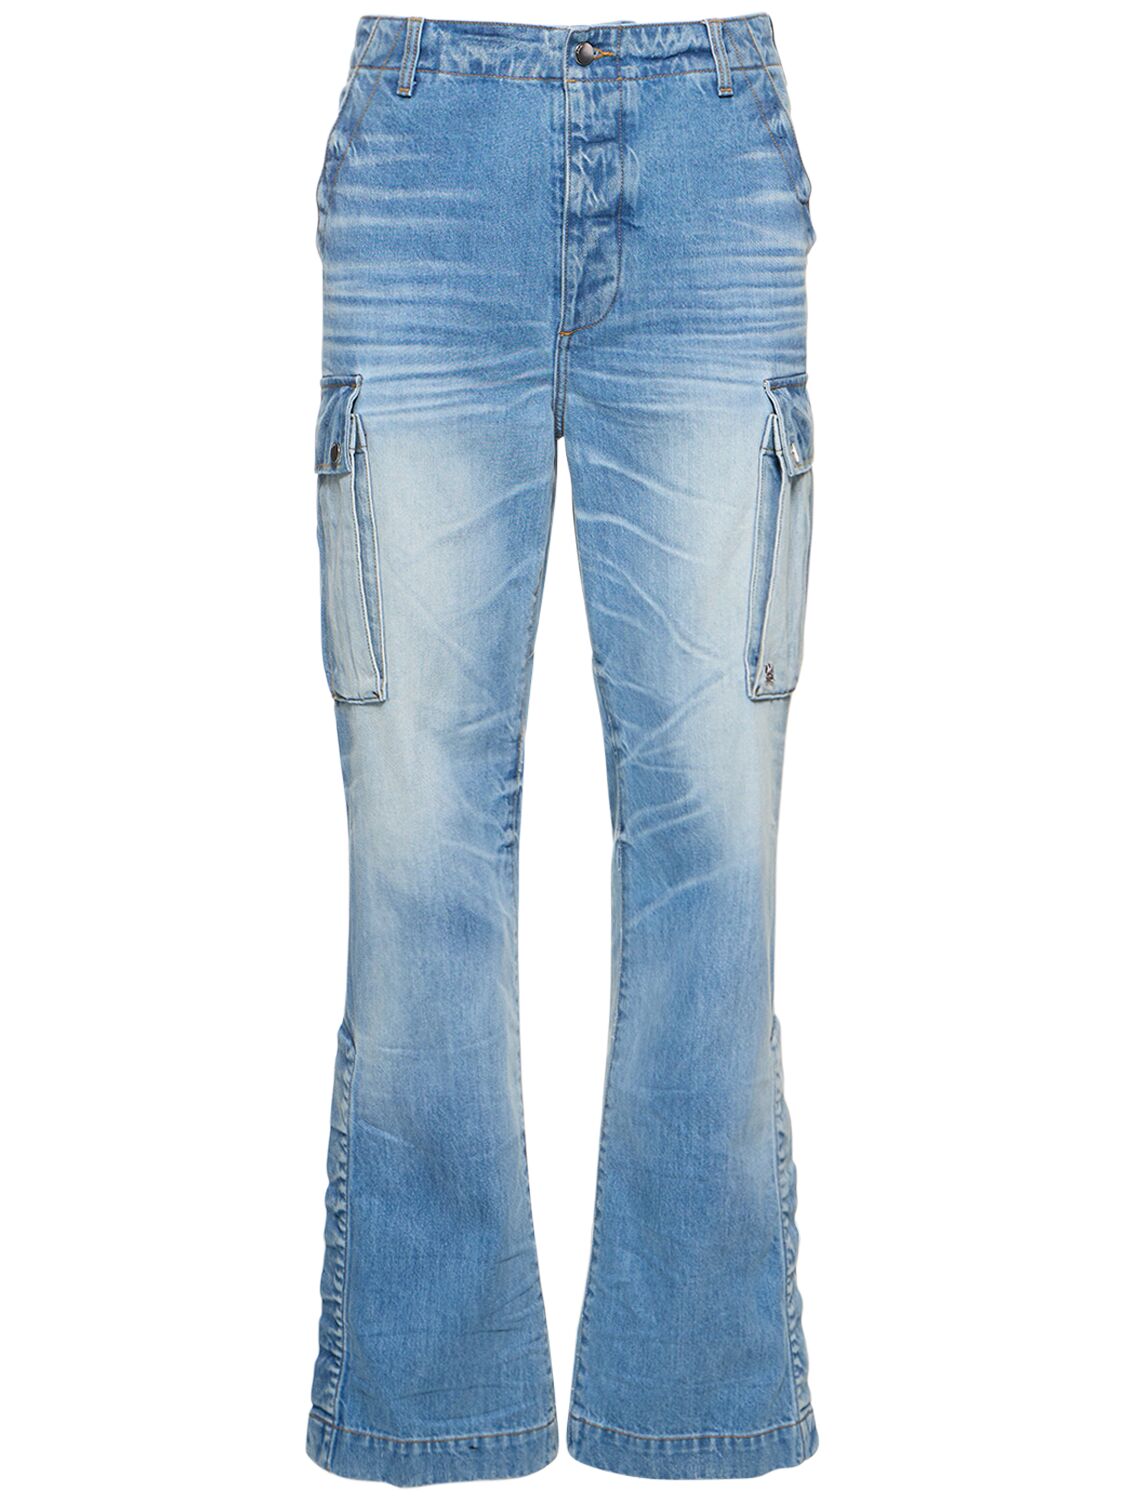 Mango cropped kick flare jeans in light blue